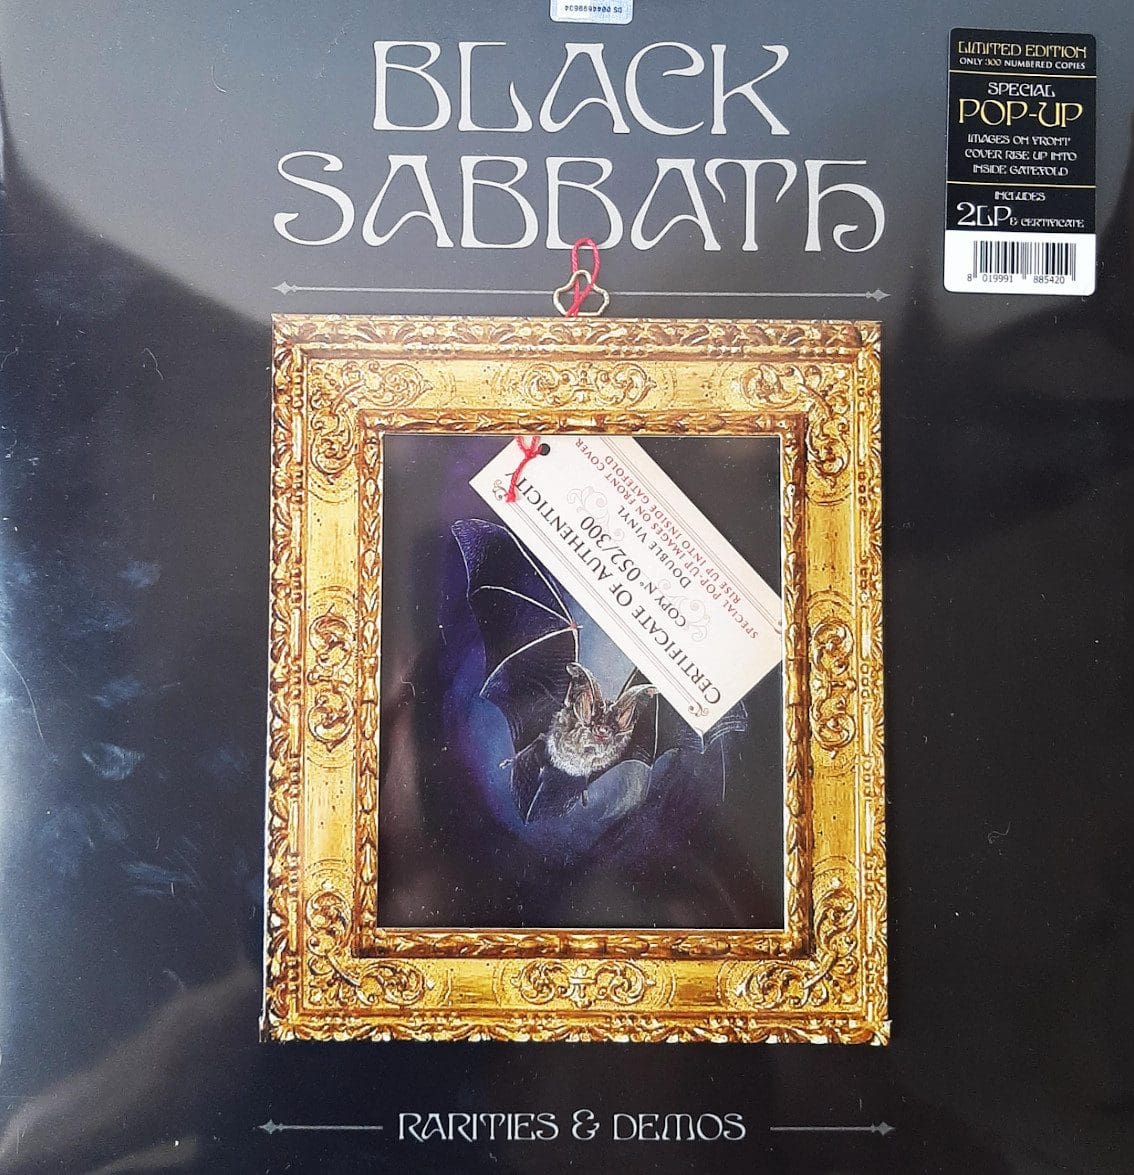 Rustblade to release Black Sabbath's 'Rarities & Demos' as deluxe gatefold double vinyl